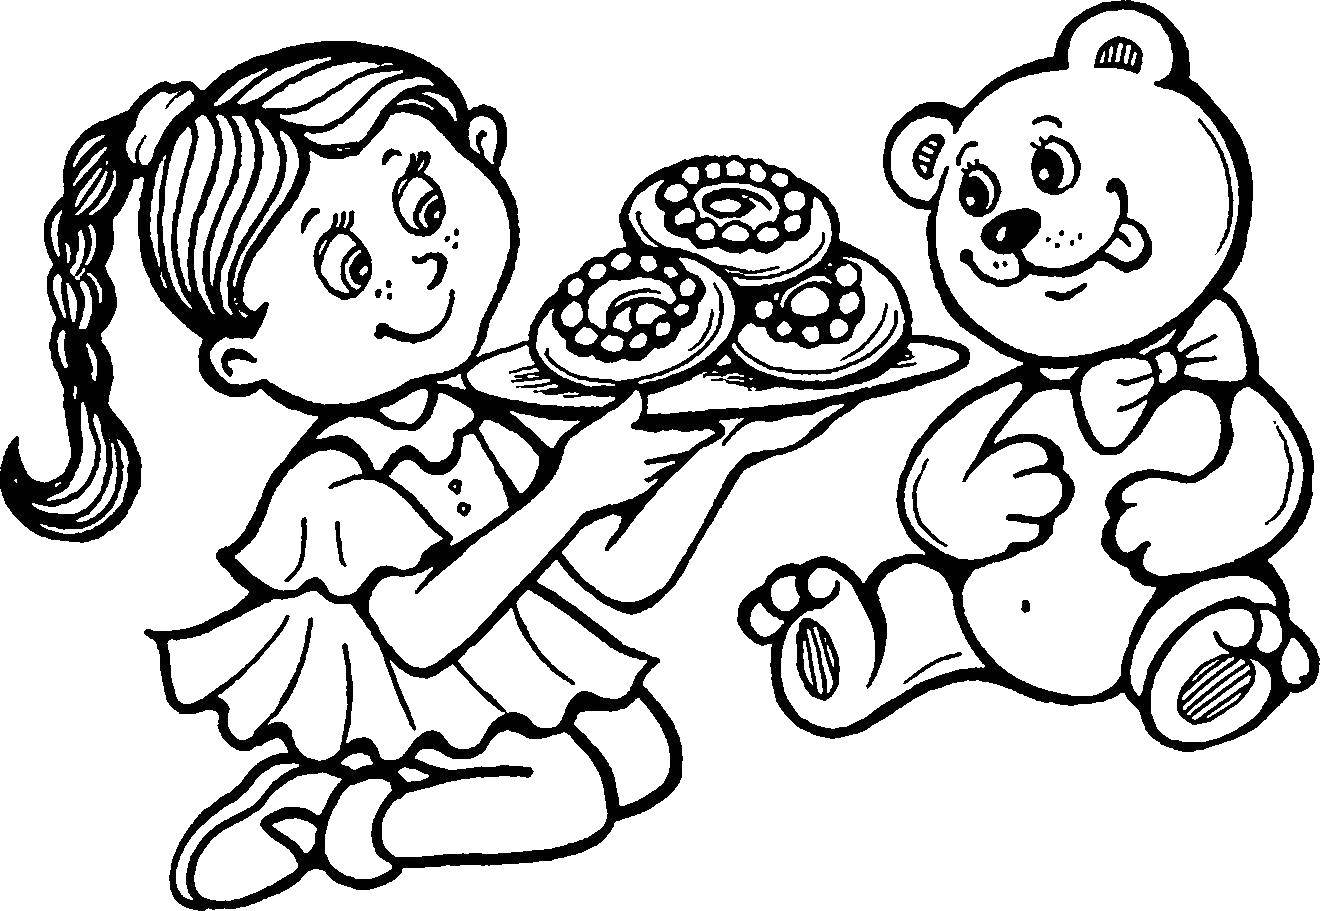 Название: Раскраска Девочка кормит мишку. Категория: Для девочек. Теги: девочка, кормит, мишка.